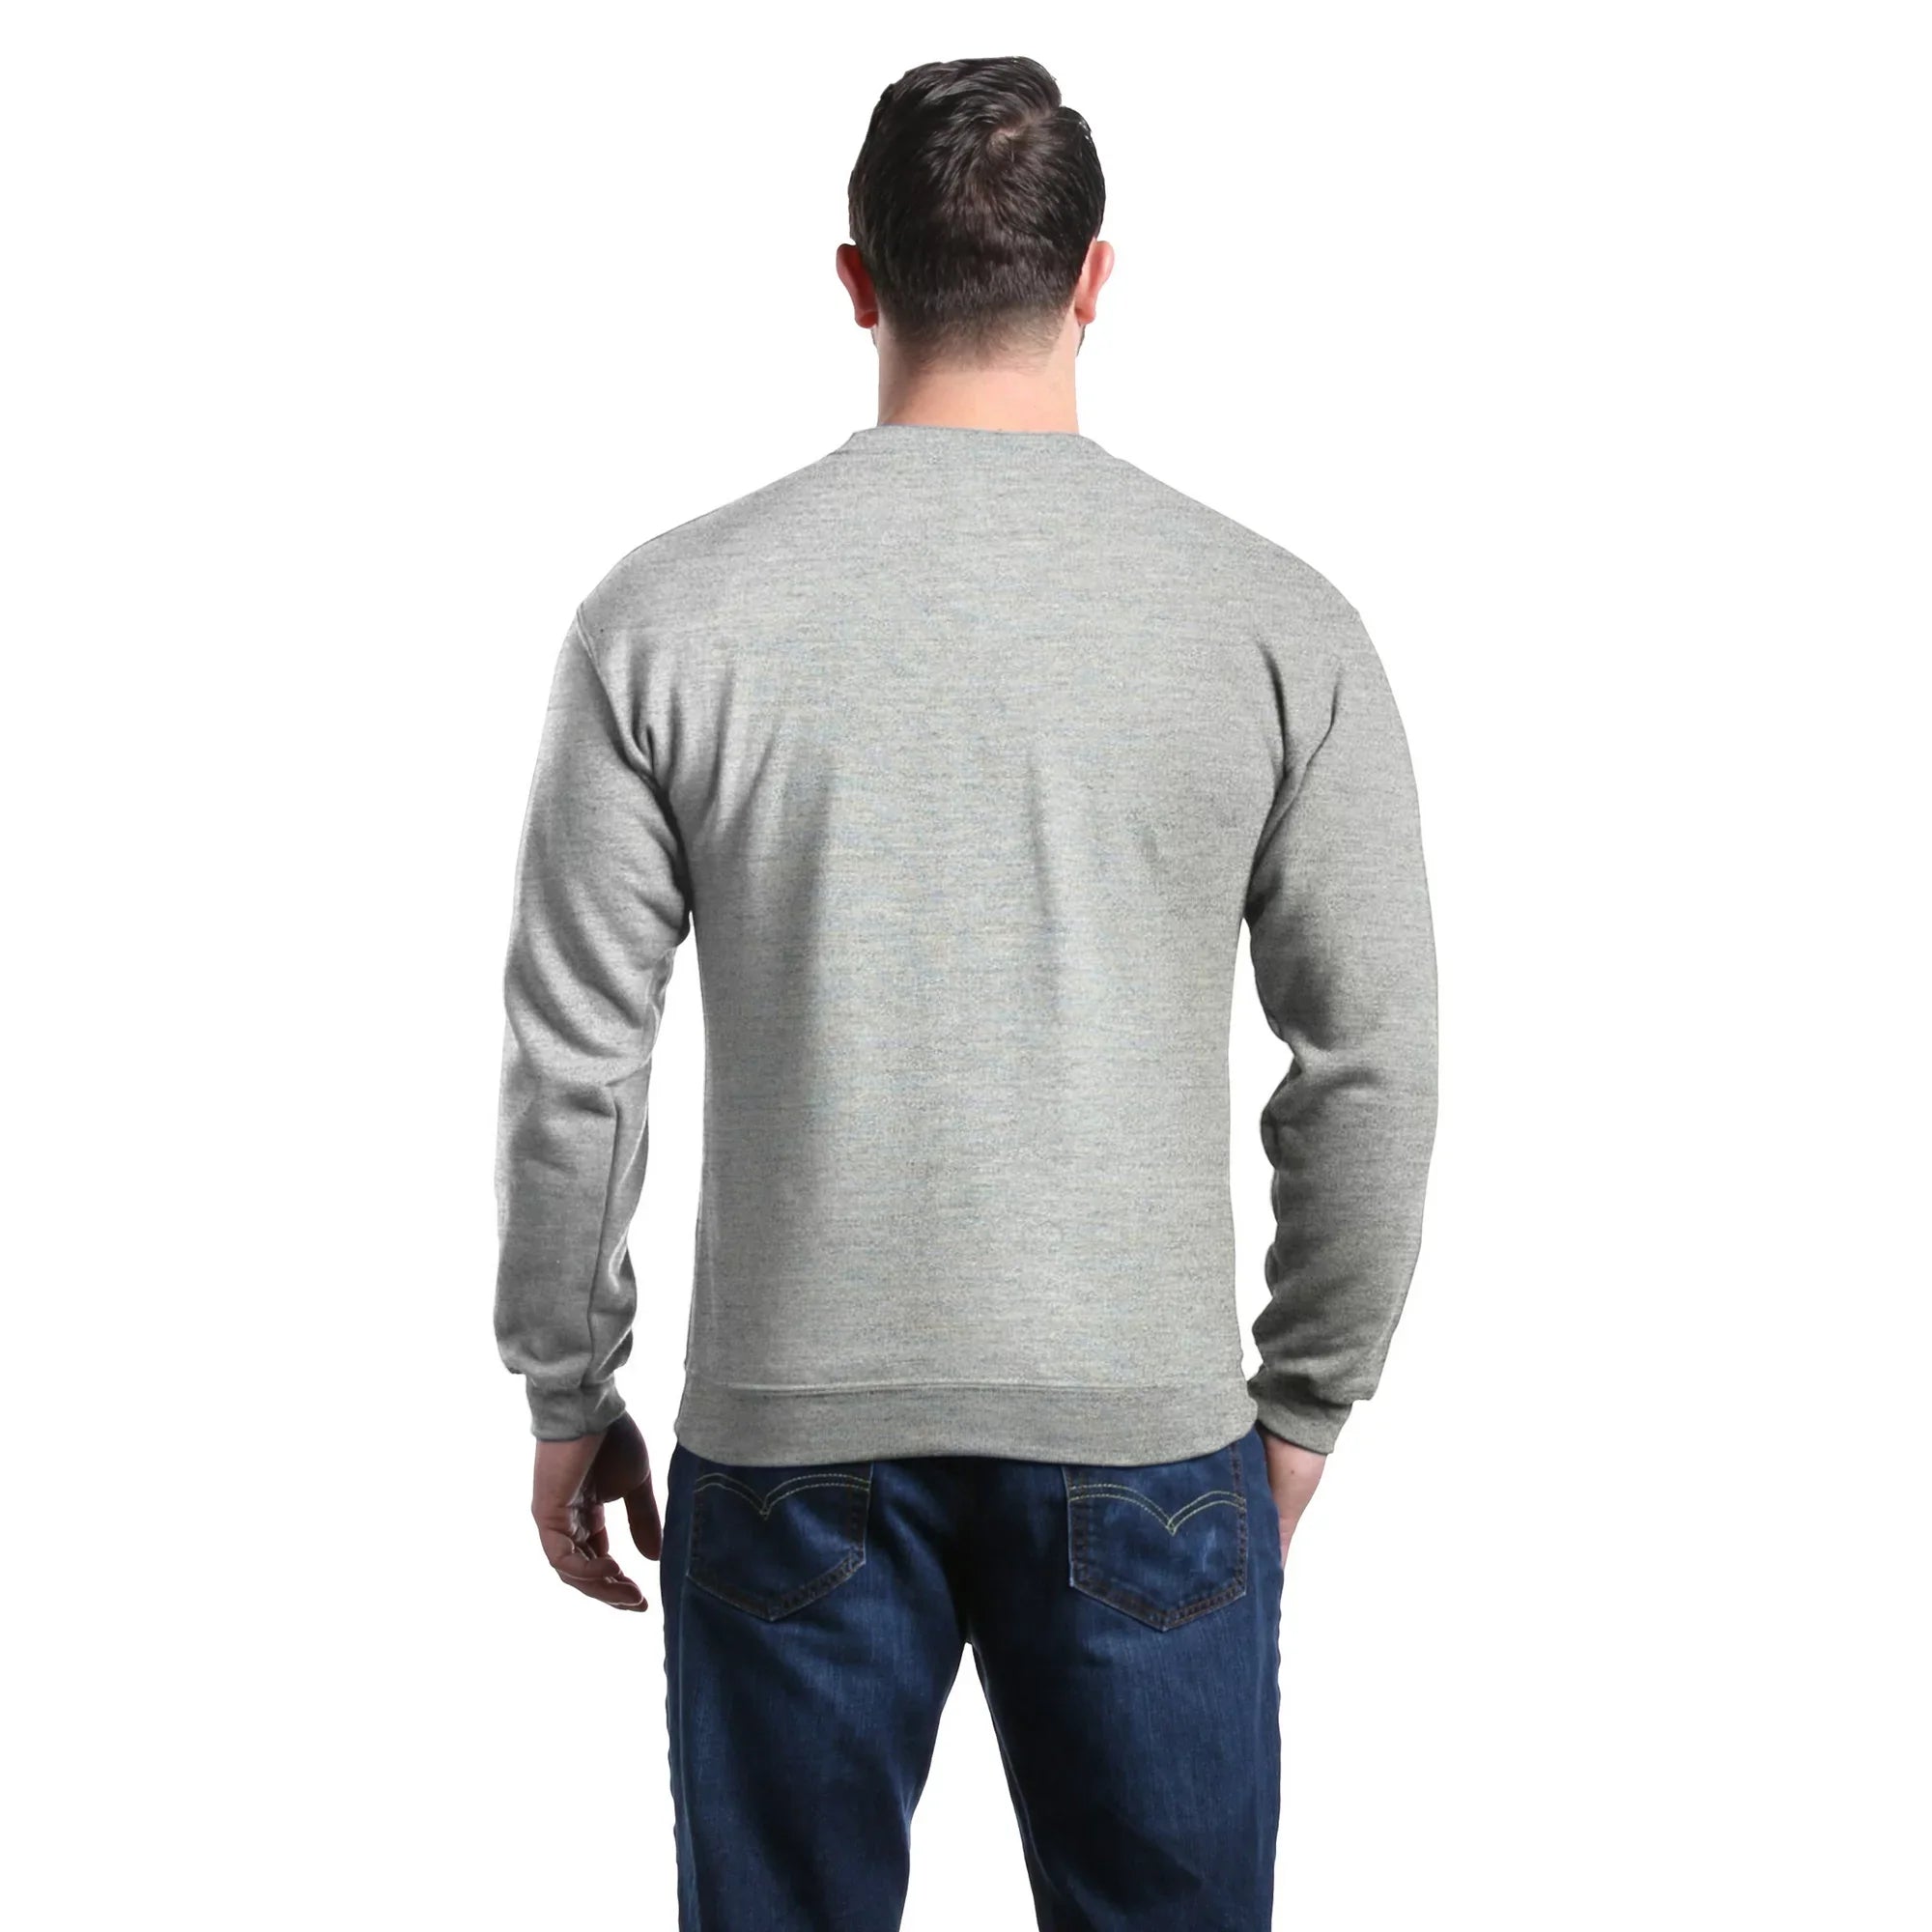 SHEIN Graphic & Slogan Print Grey Solid Thermal Lined Sweatshirt - Negative Apparel